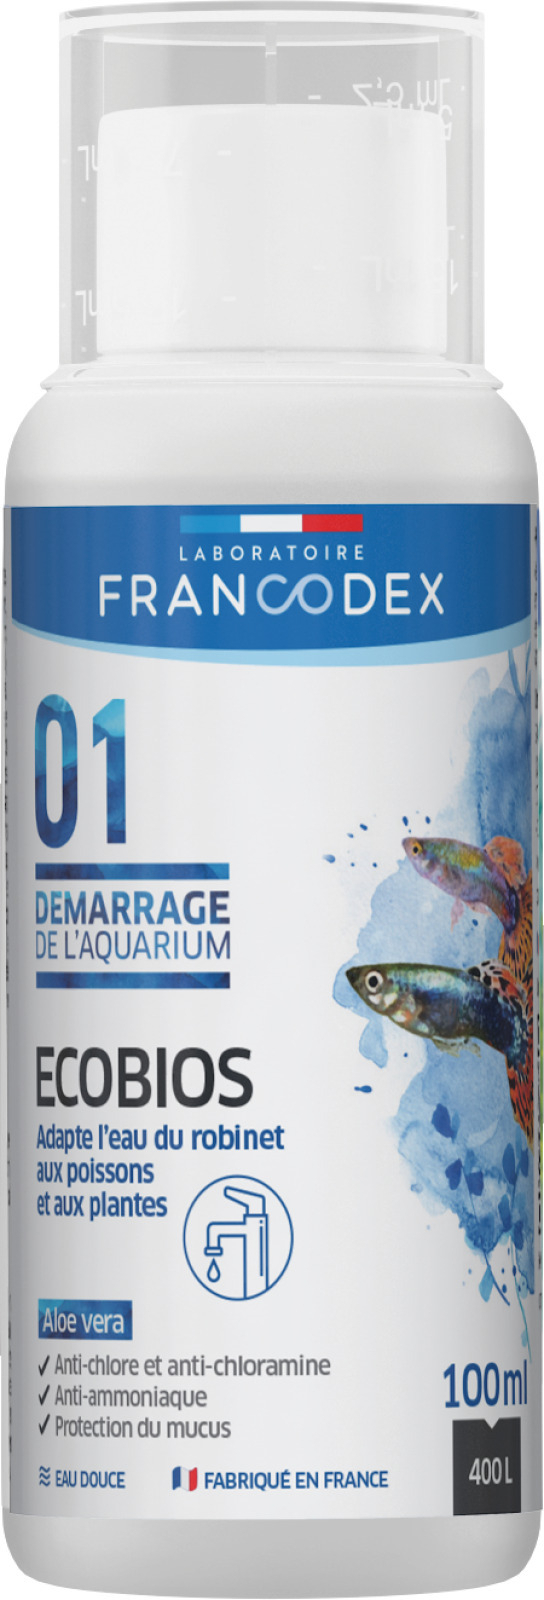 Ecobios condizionatore d'acqua FRANCODEX